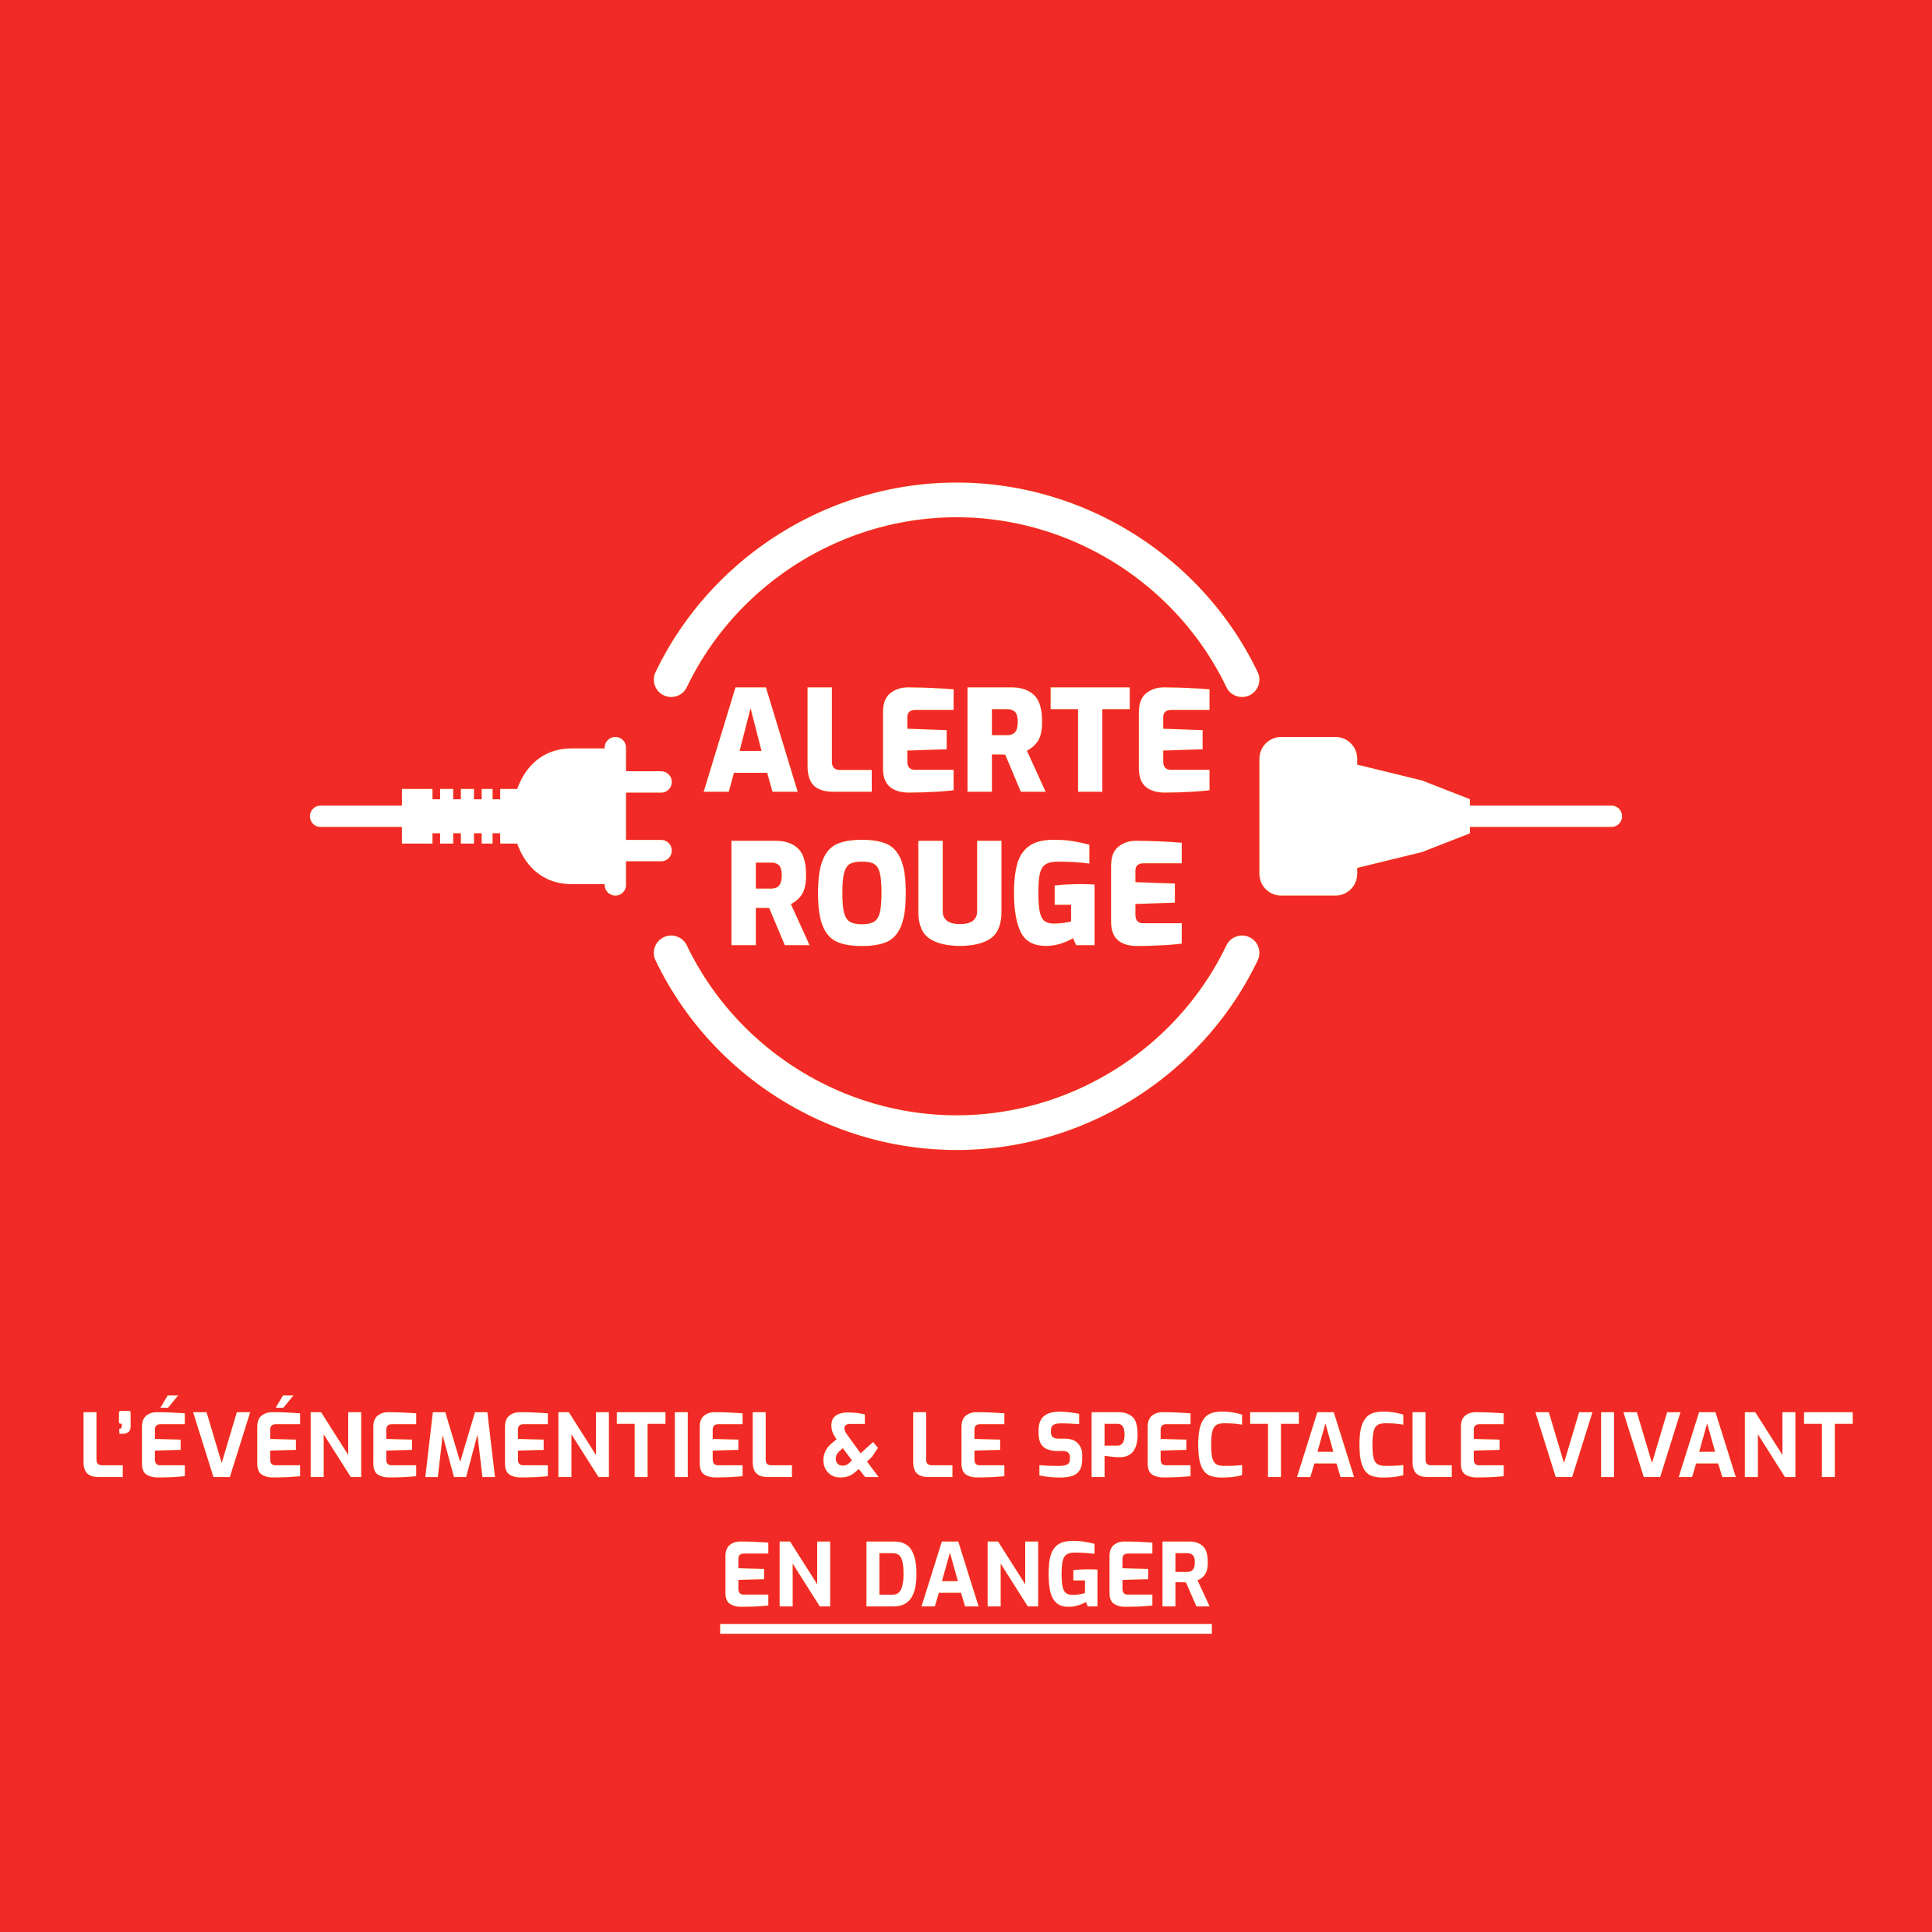 alerte_rouge_logo_slogan_impact